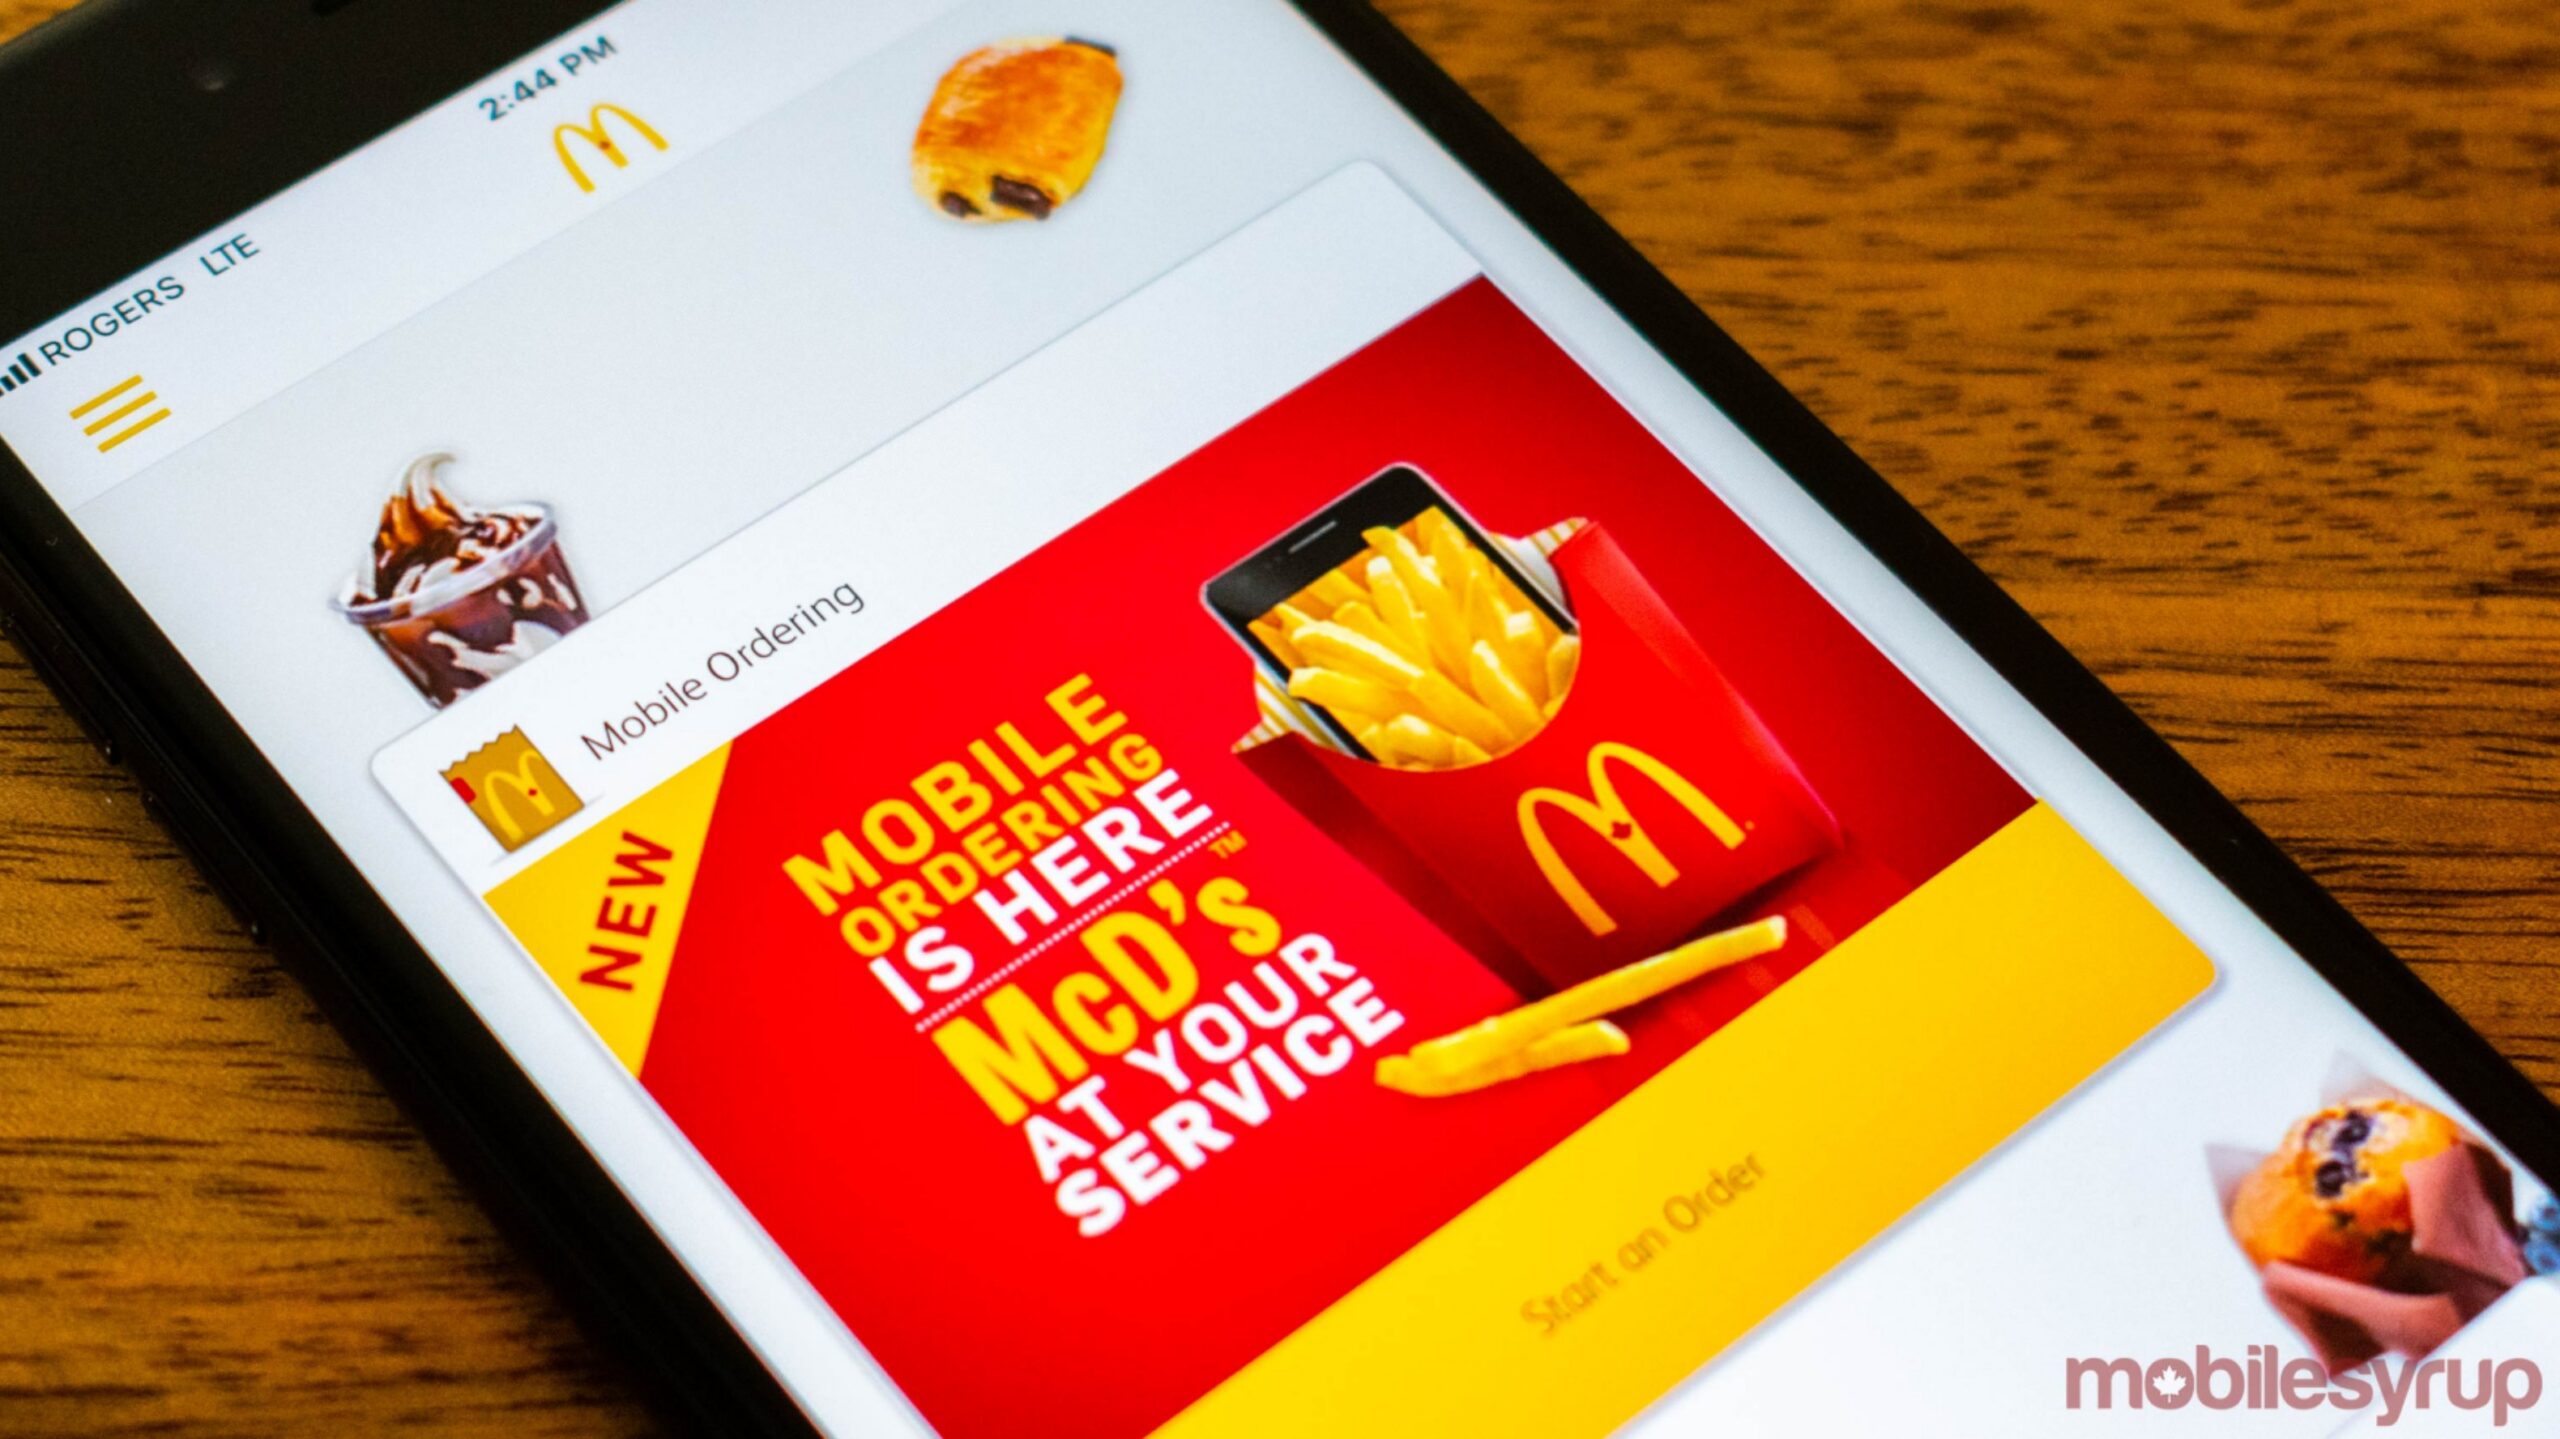 McDonald's Canada mobile app rewards program now includes fries